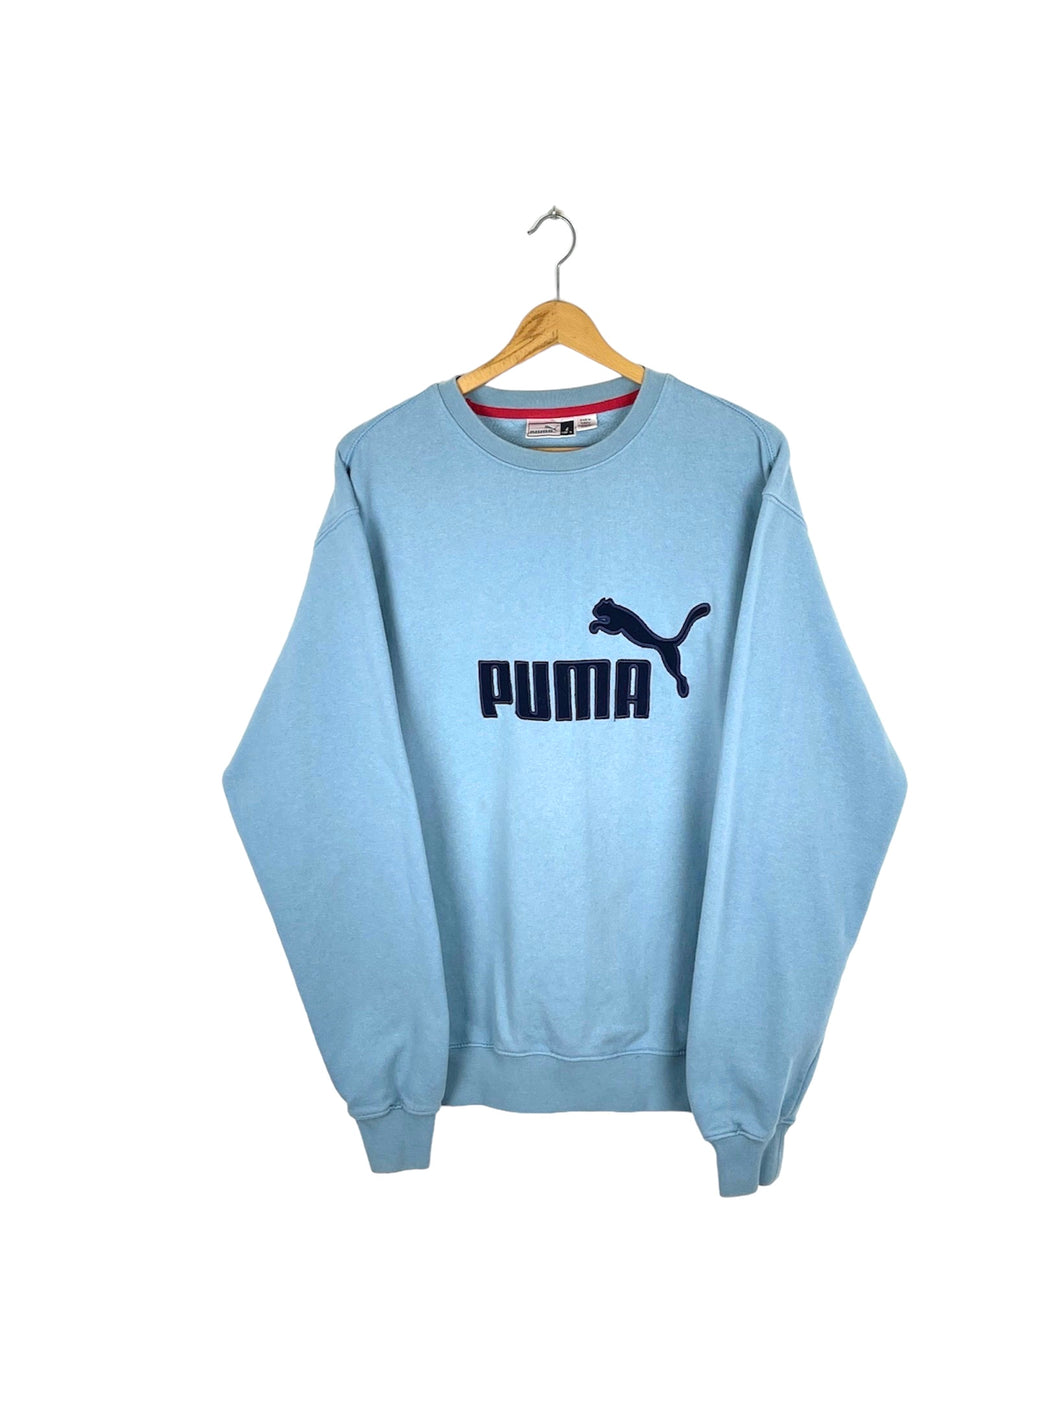 Puma Sweatshirt - Large